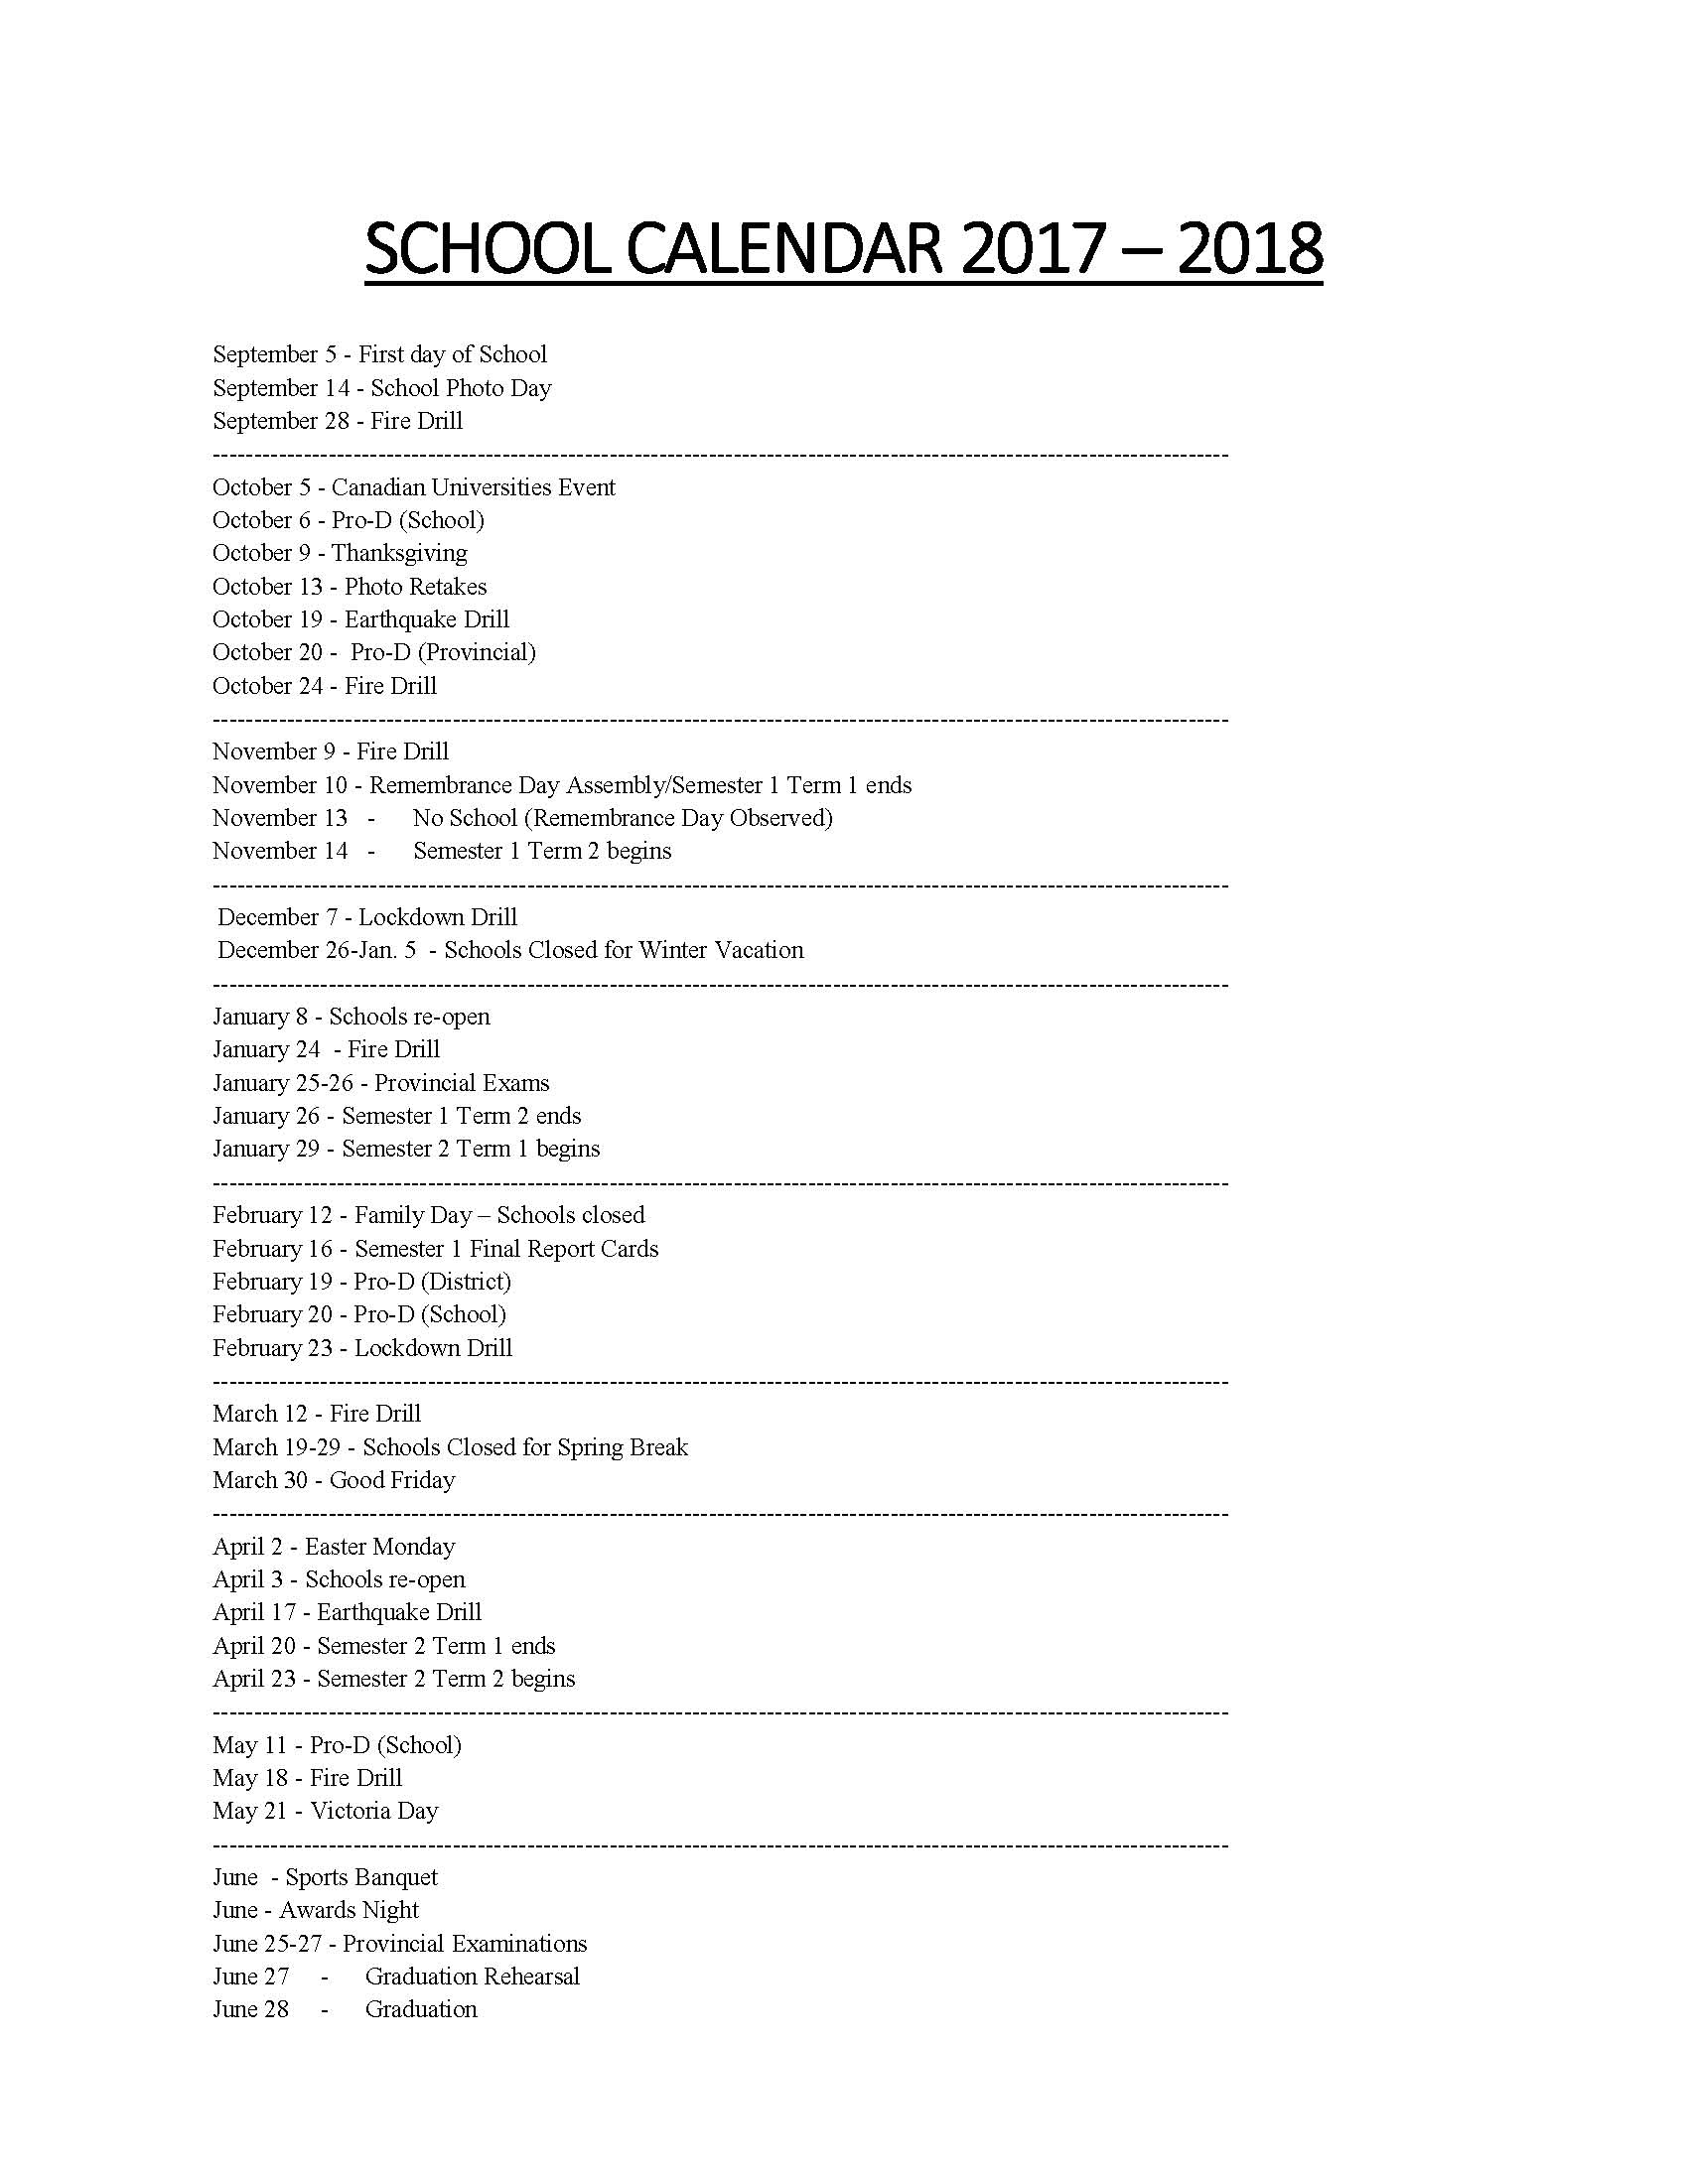 SCHOOL-CALENDAR-2017.jpg